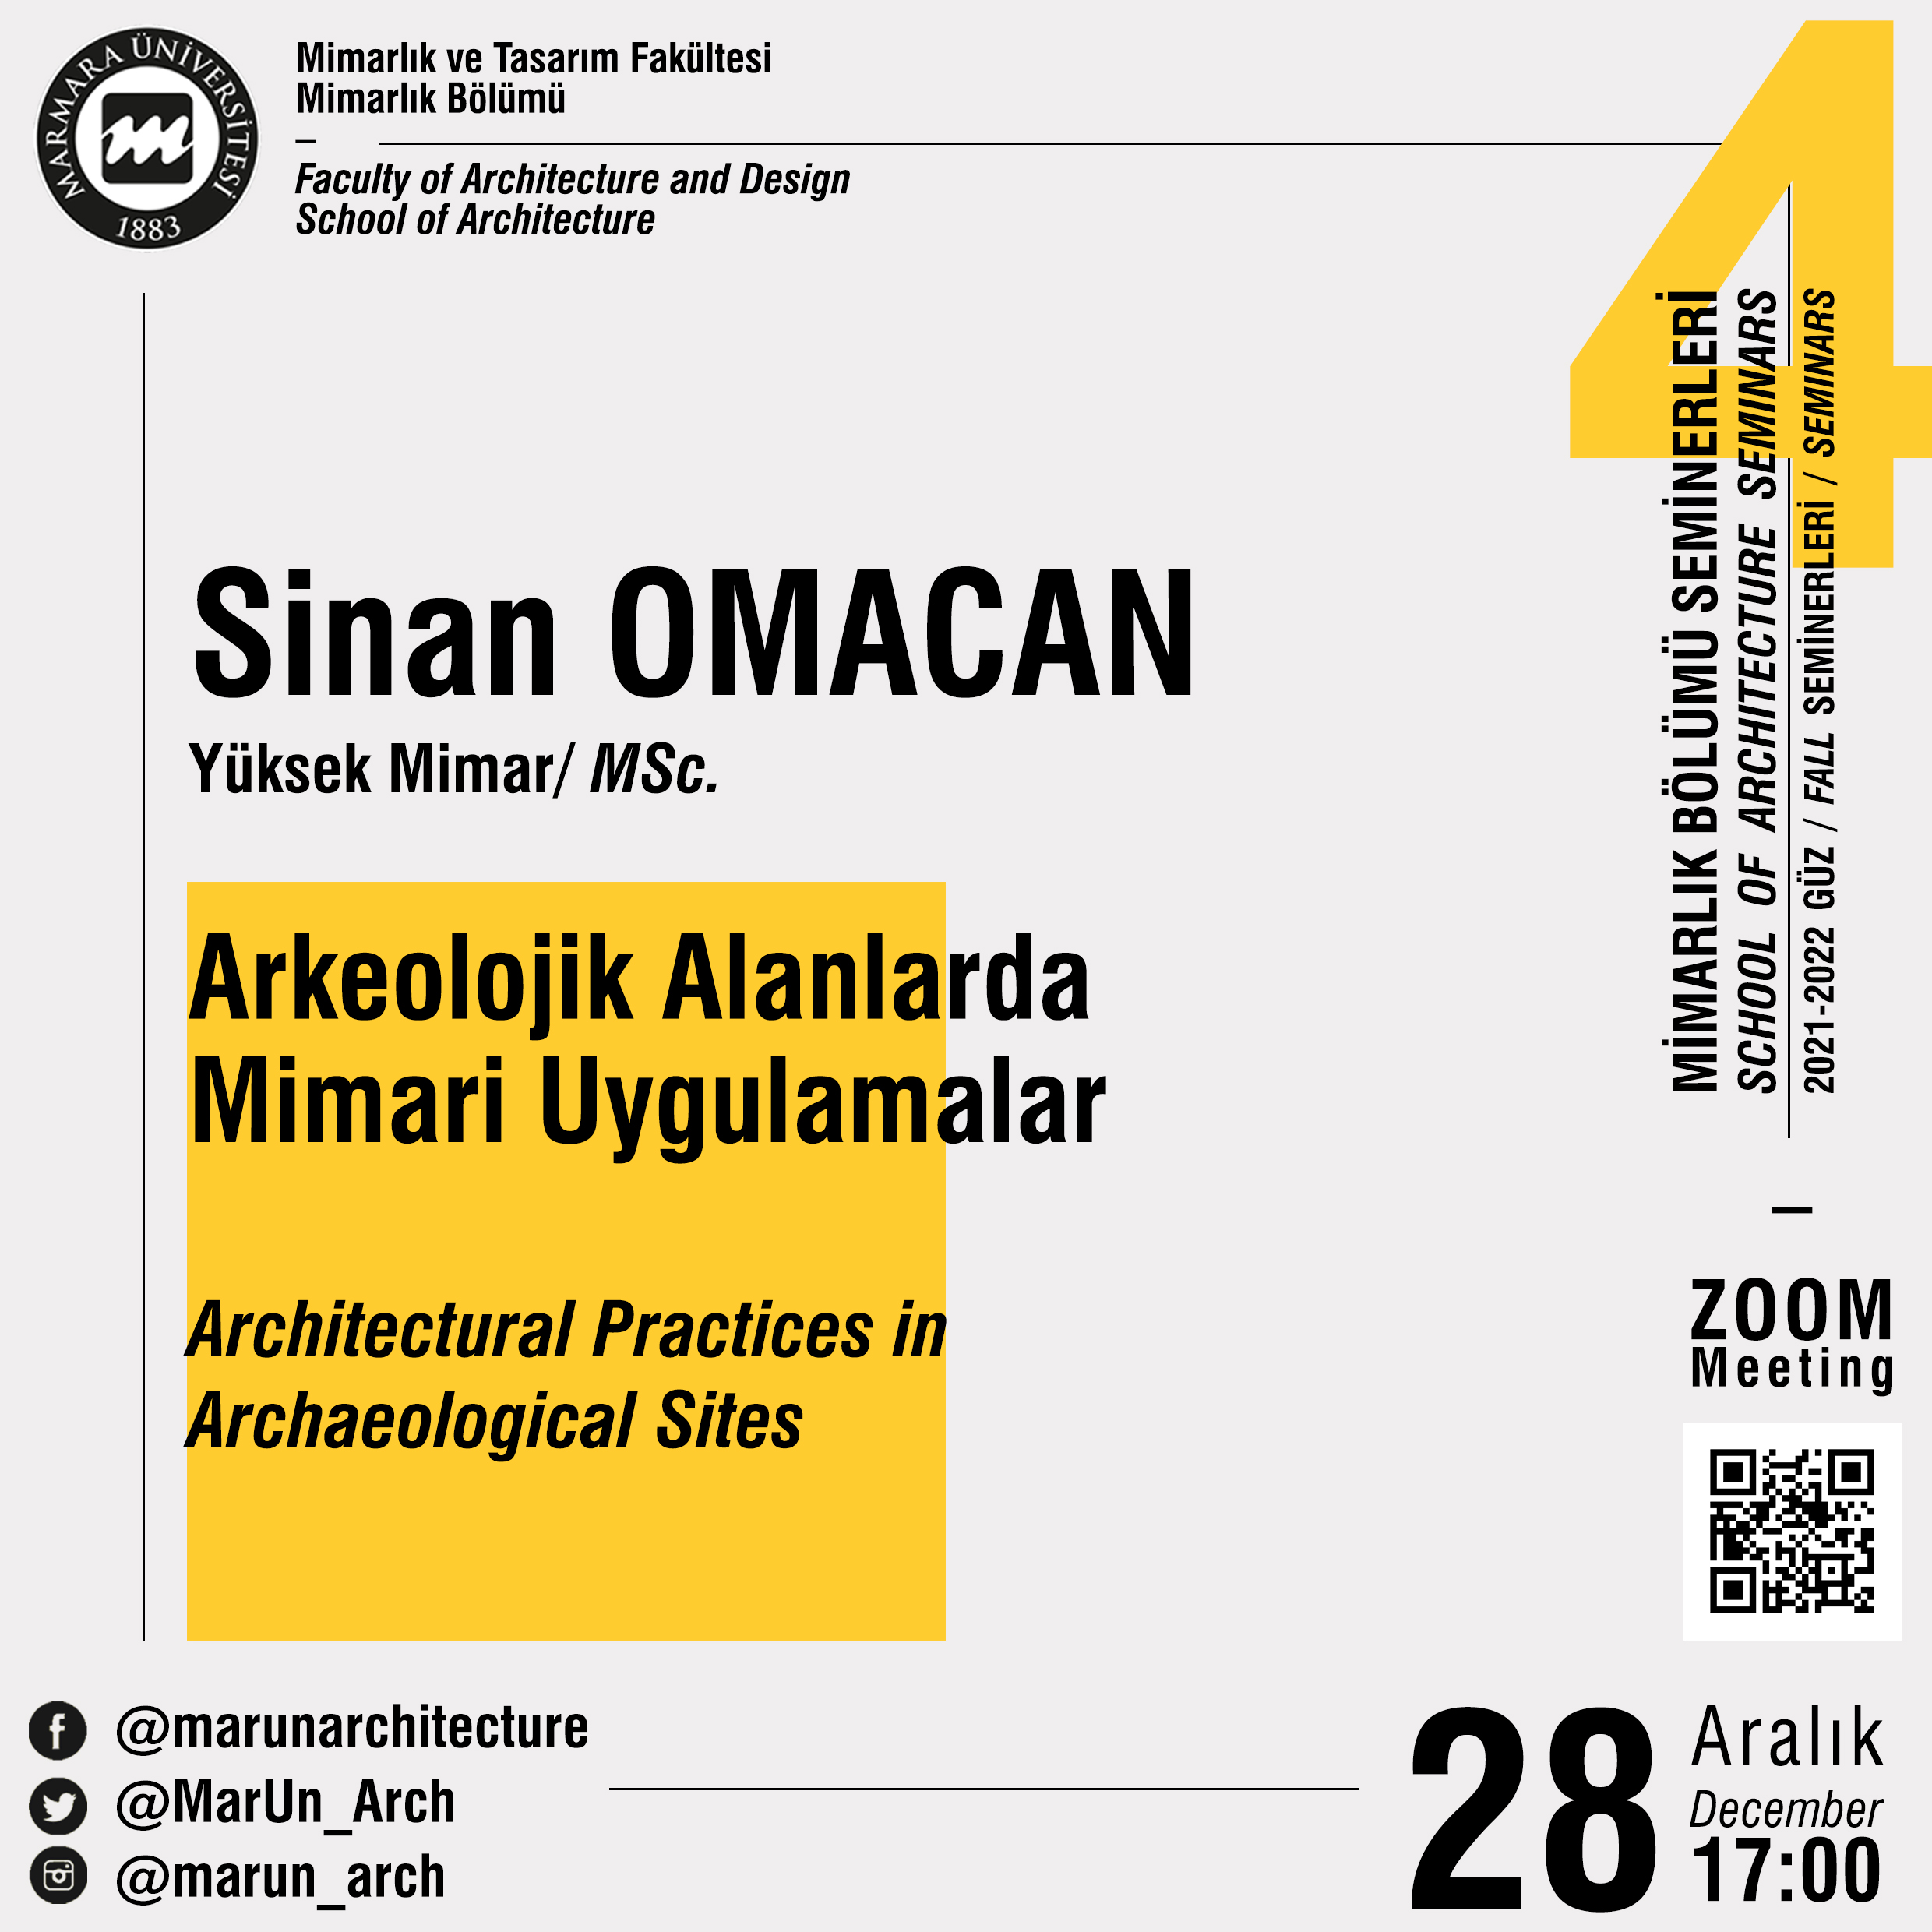 04_Sinan Omacan-1.jpg (1.25 MB)